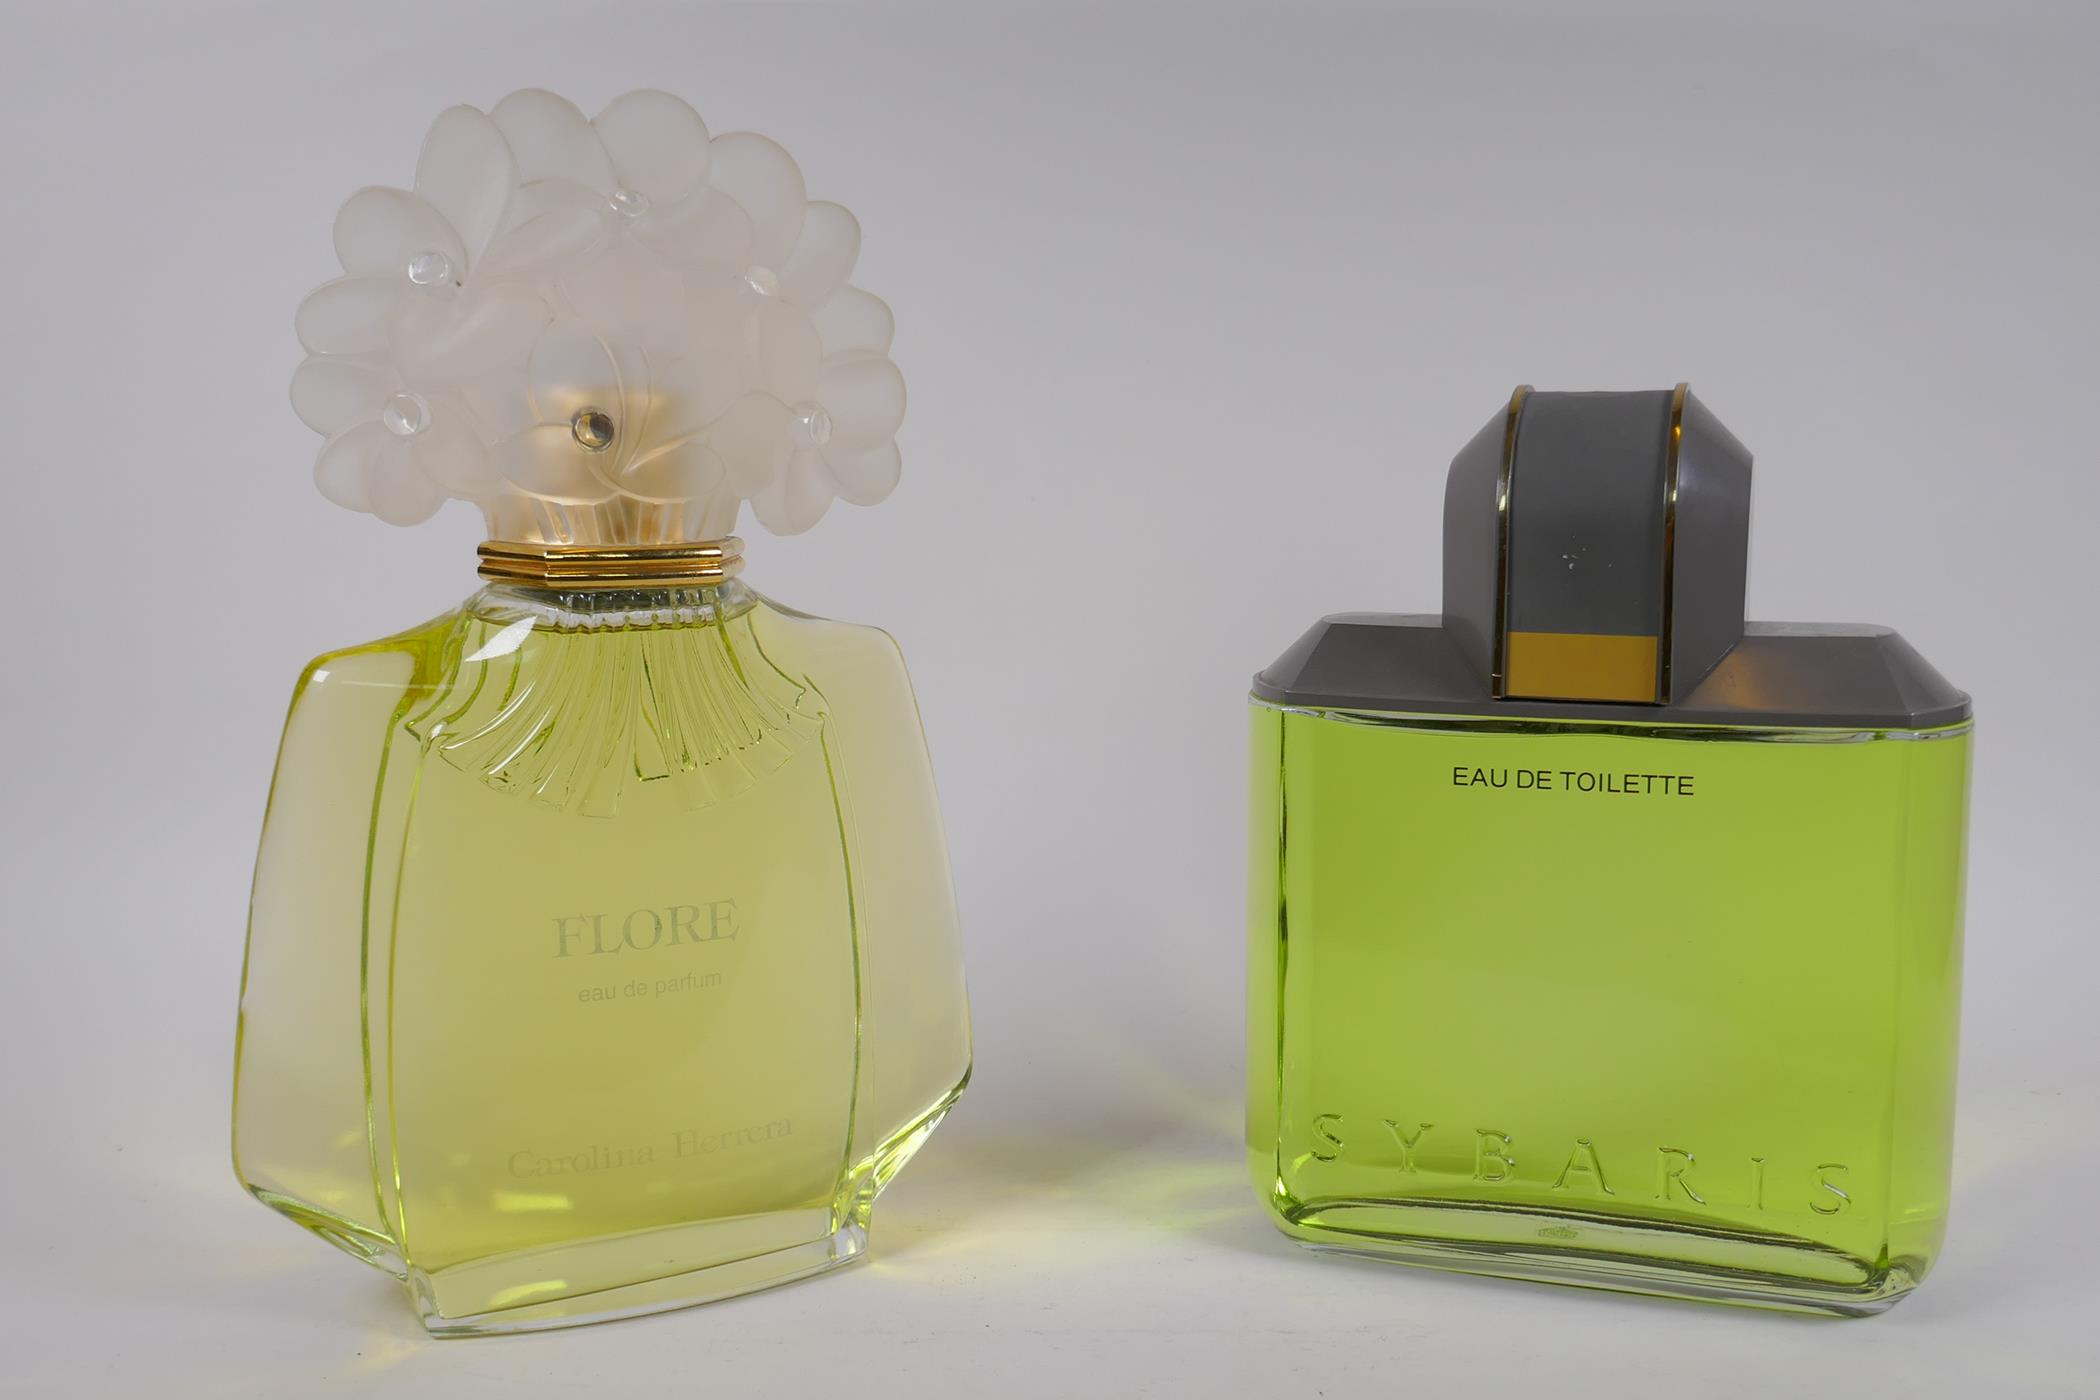 An oversized Carolina Herrera Flore perfume display bottle, and a similar Antonio Puig Sybaris